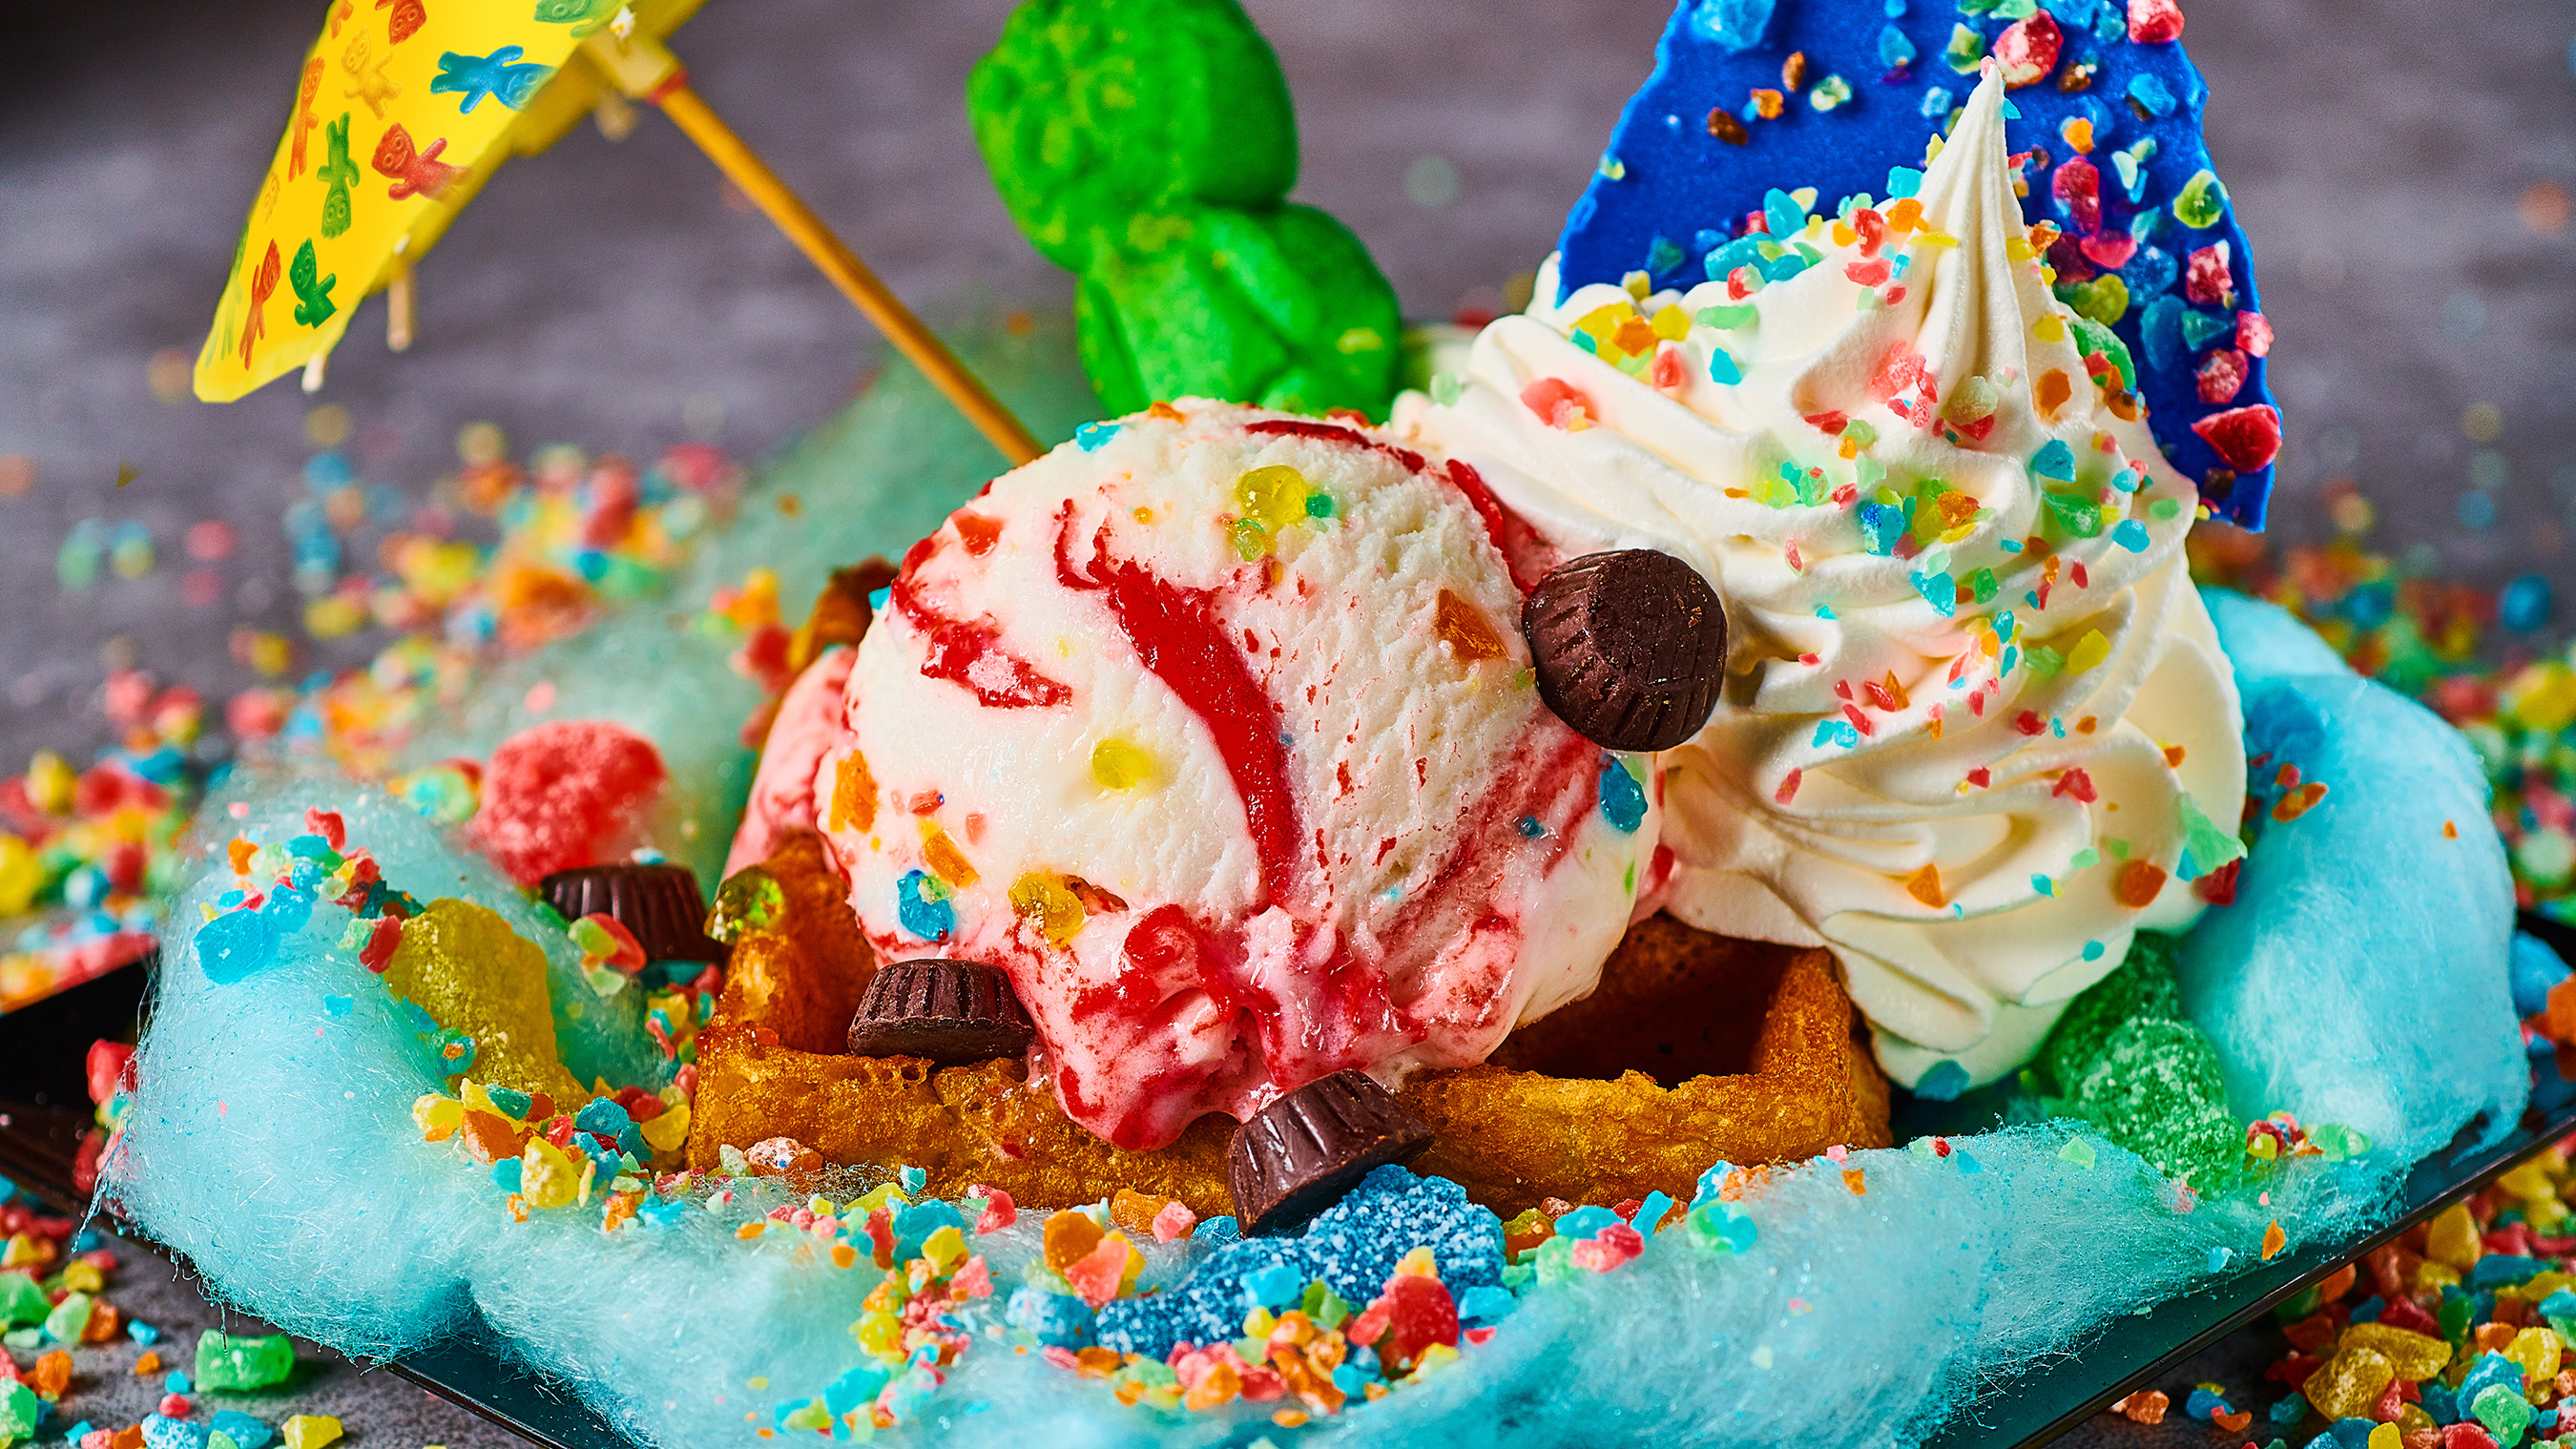 Colorful ice cream sundae